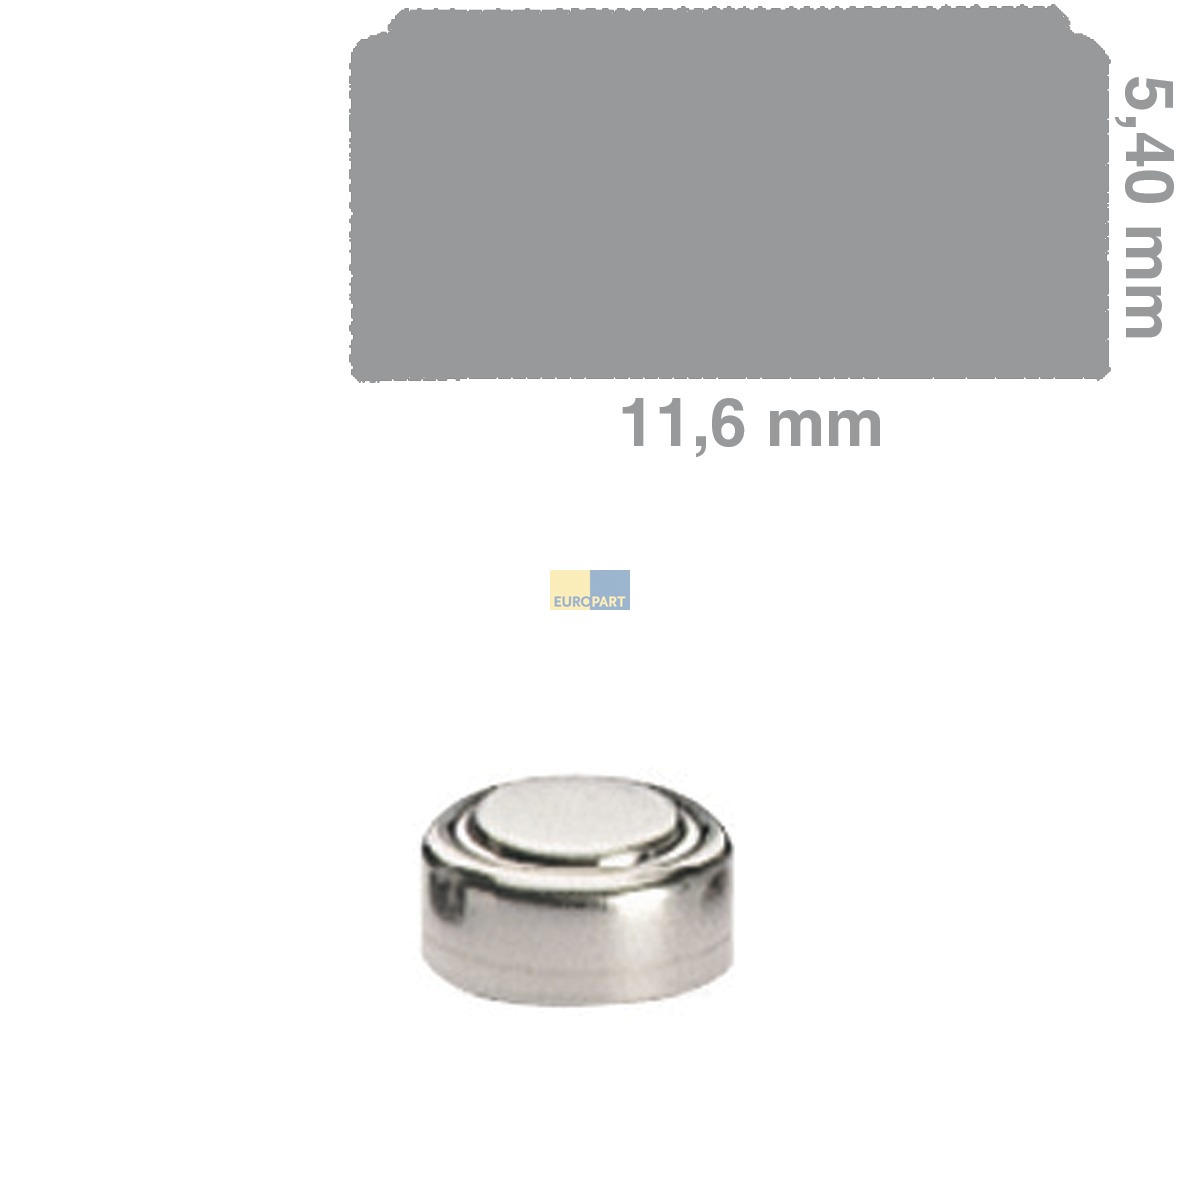 Batterie LR44 Panasonic Knopfzelle für Digitalthermometer Fotoapparat (KD-2B120589)